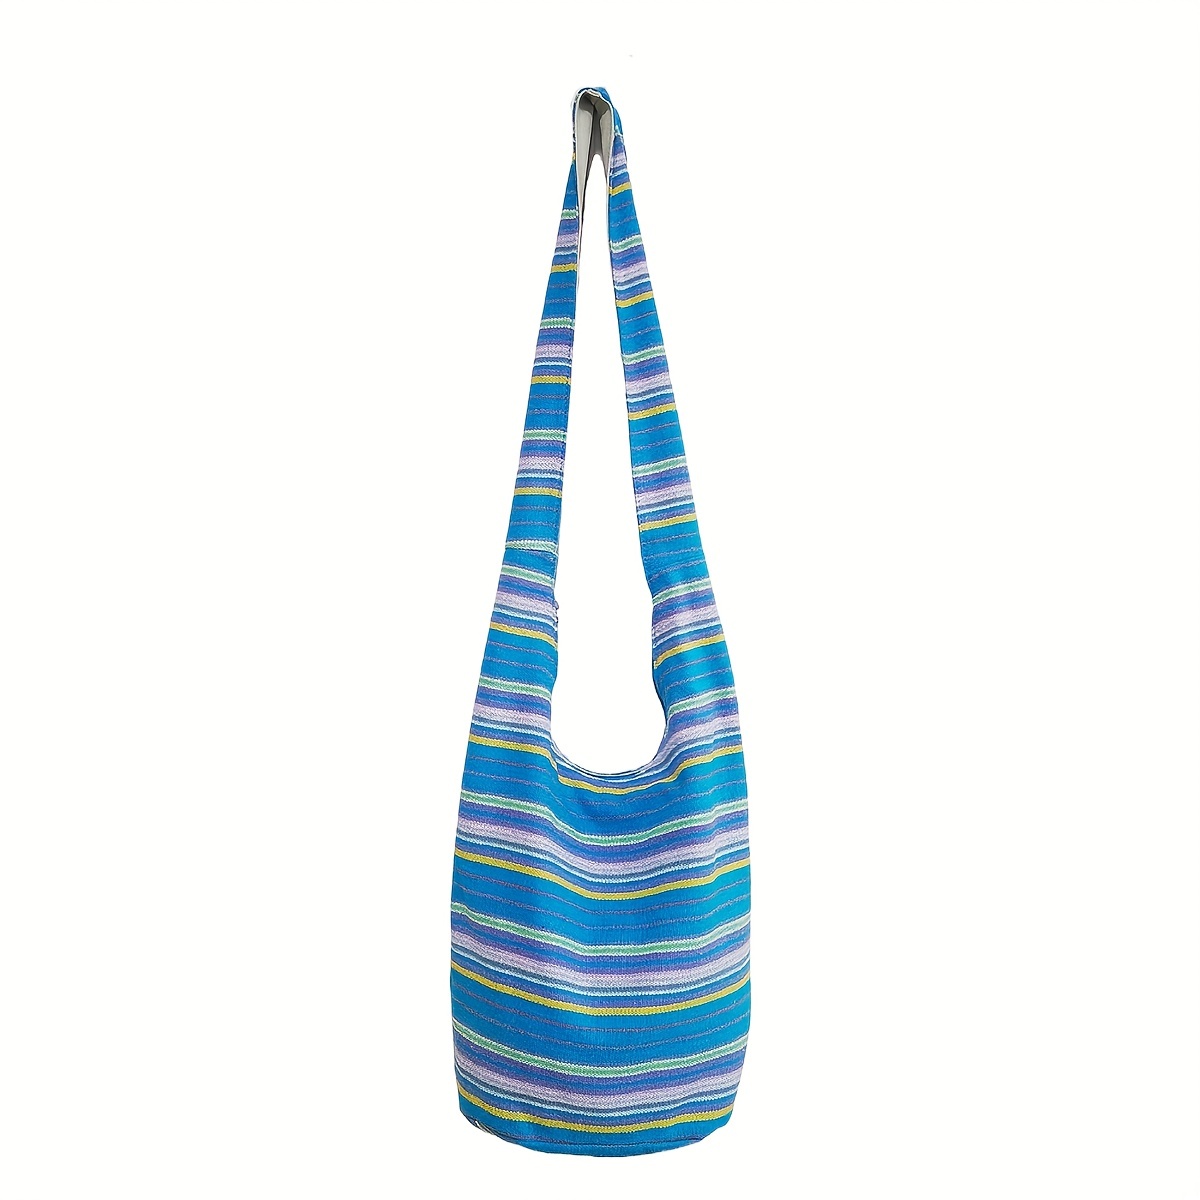 Half Moon Tote Bag - Handmade Hippie Bag With Colourful Vintage Fabrics